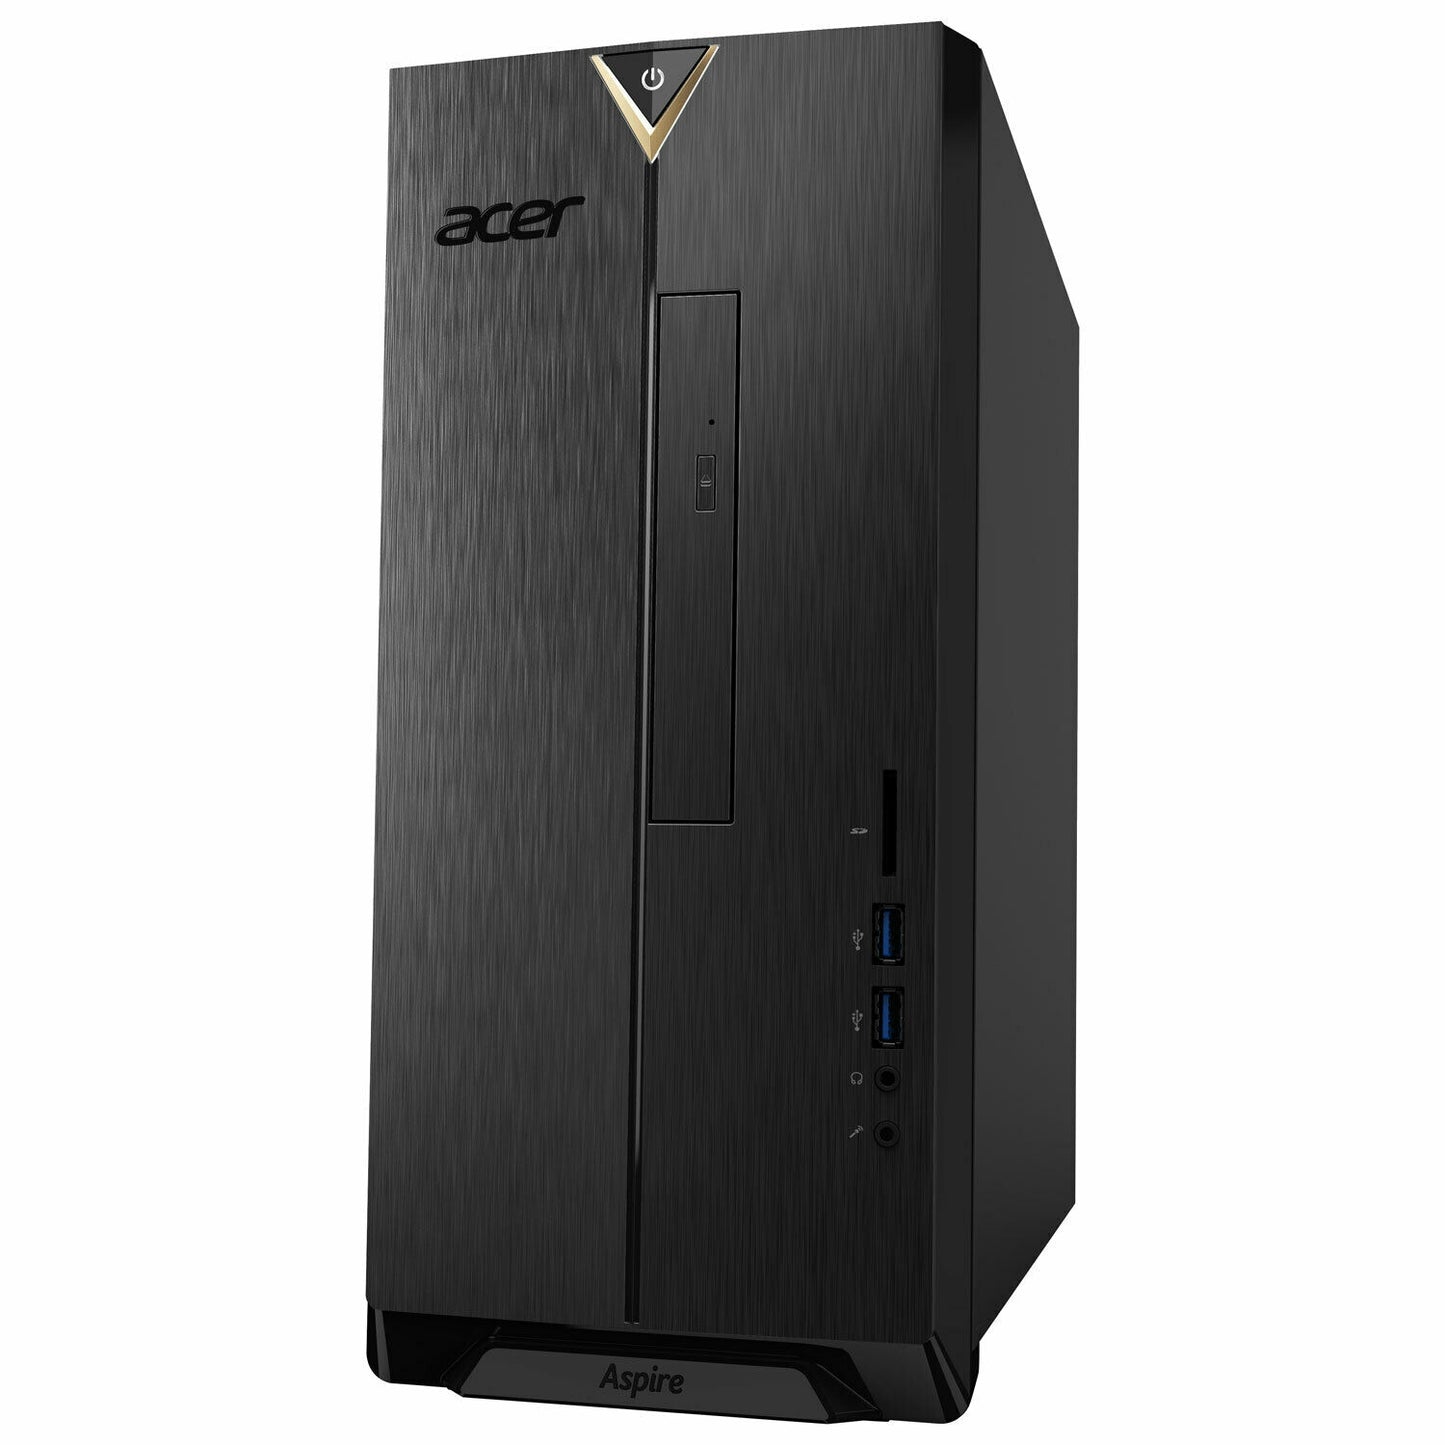 Acer Aspire Desktop PC AMD A6-9220 2.5GHz 8GB RAM 1TB HDD WiFi BT Win10 Home